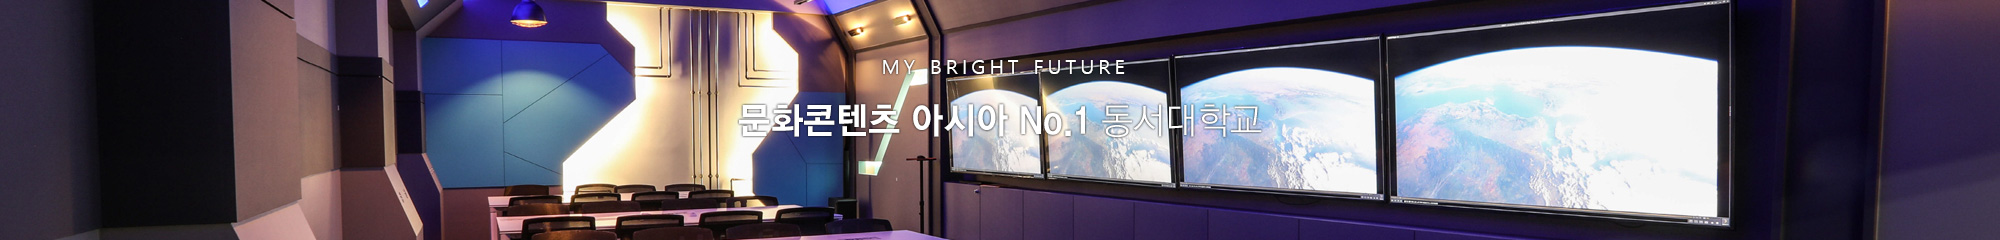 MY BRIGHT FUTURE
문화콘텐츠 아시아 No.1 동서대학교